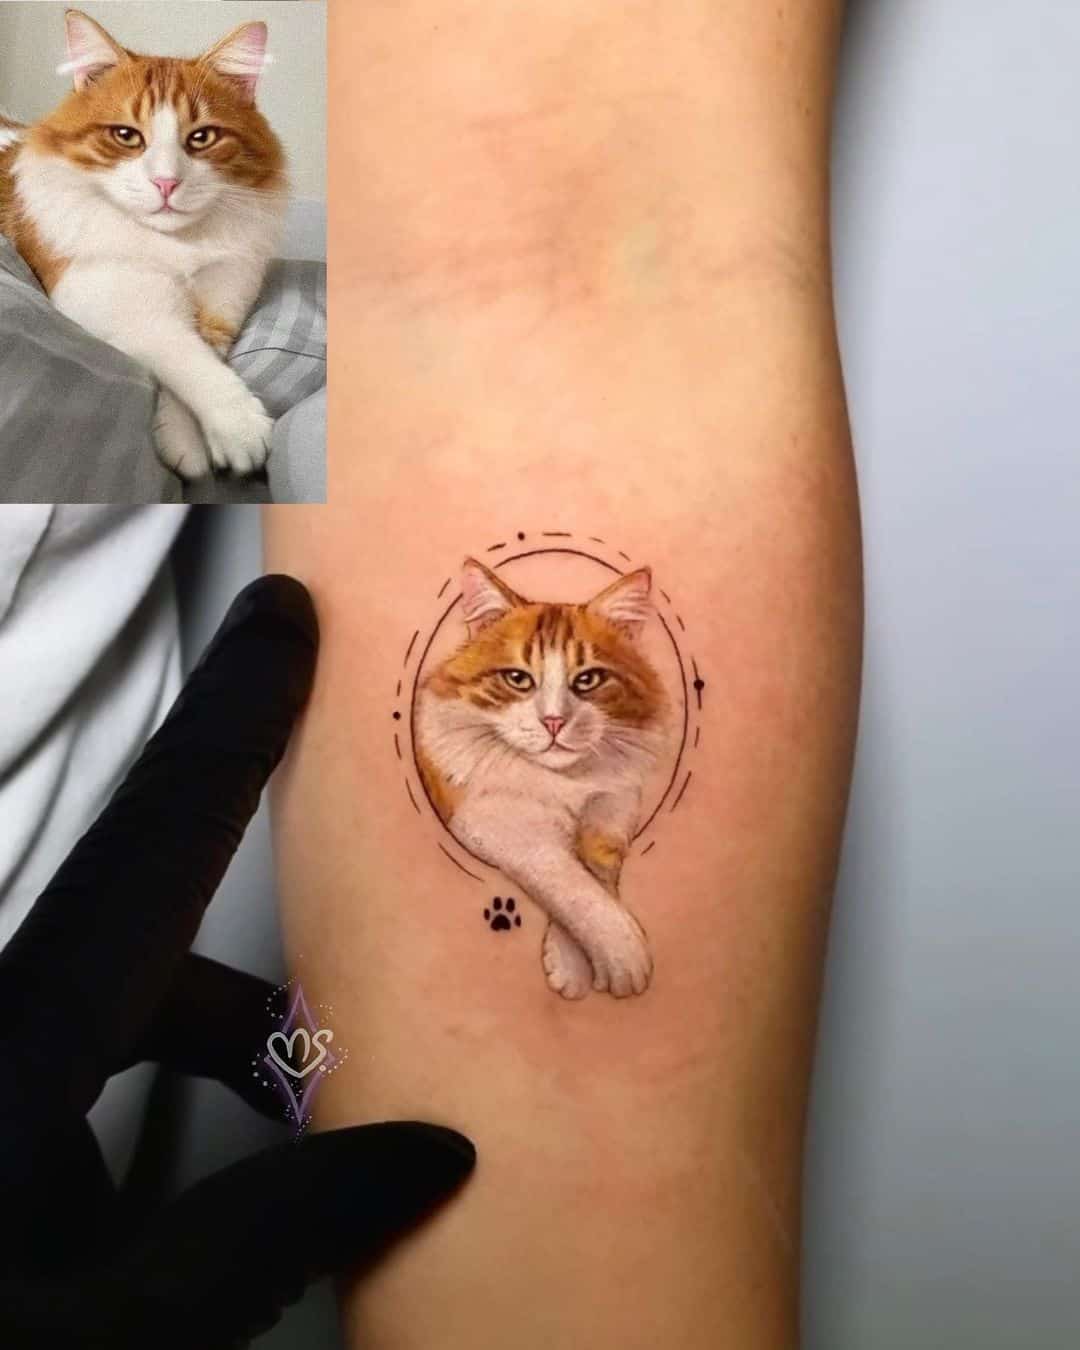 Amazing Cat Tattoo Ideas | Book Your Tattoo With Australian Artists